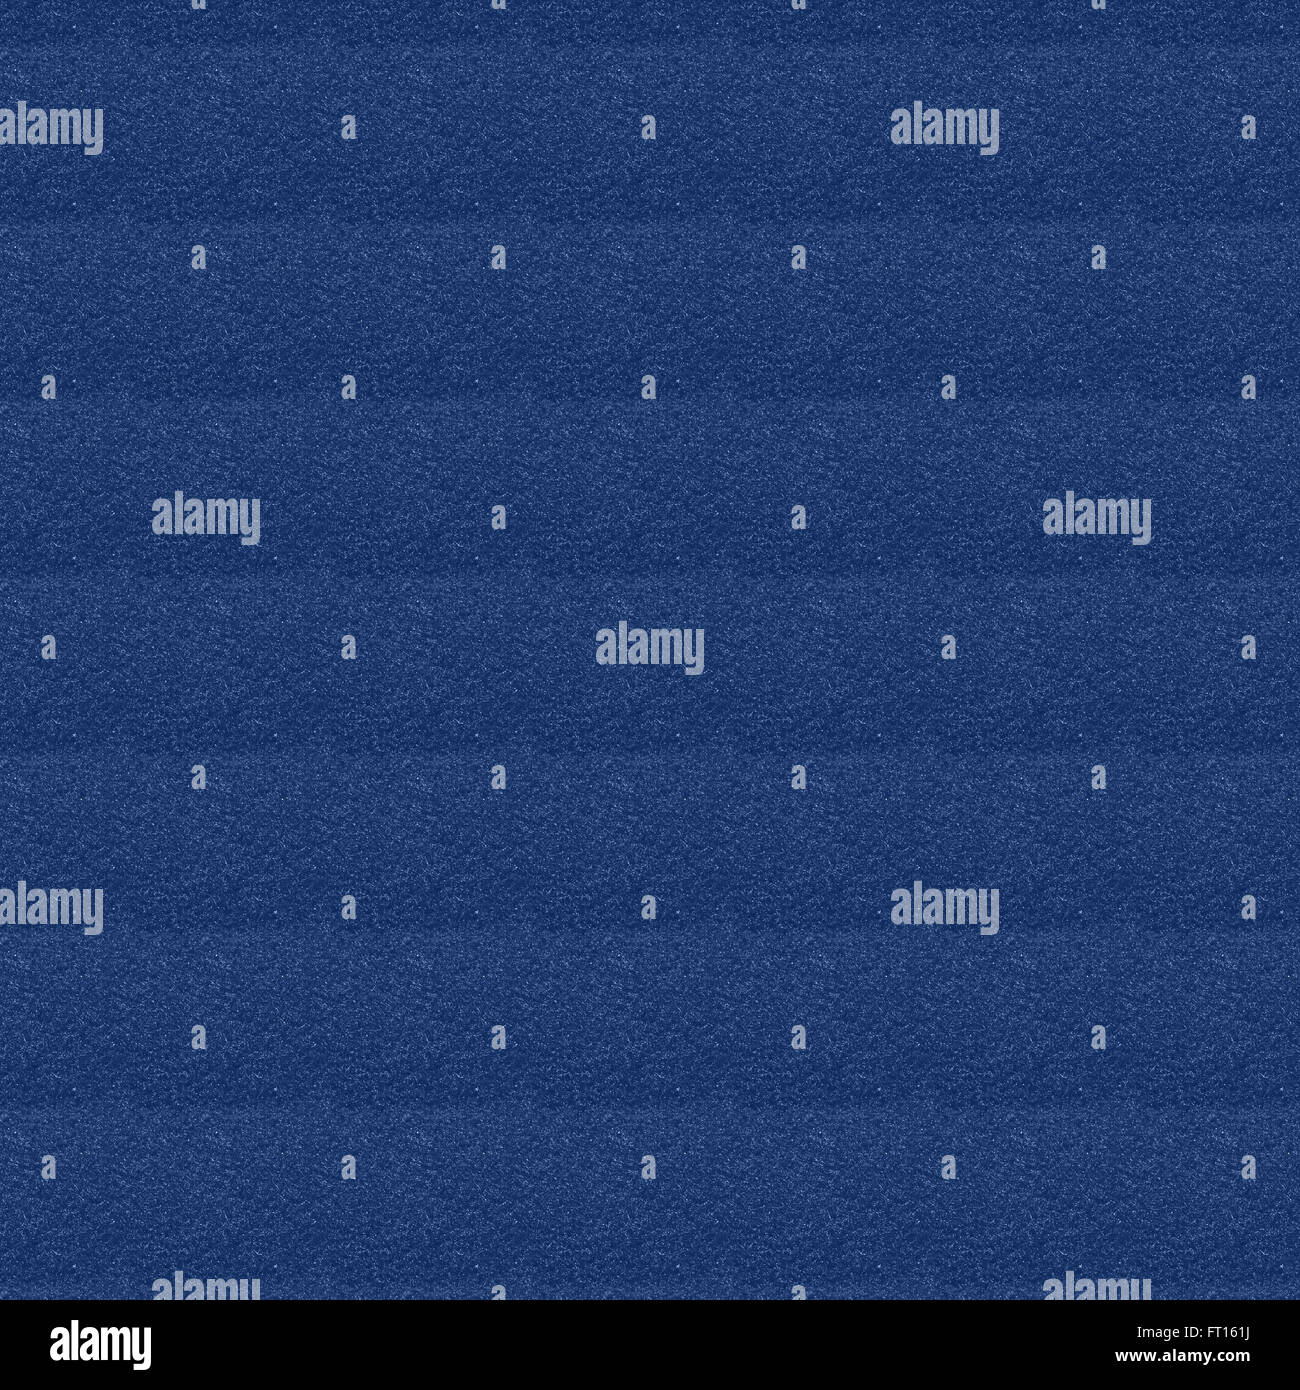 Blue fabric seamless background Stock Photo